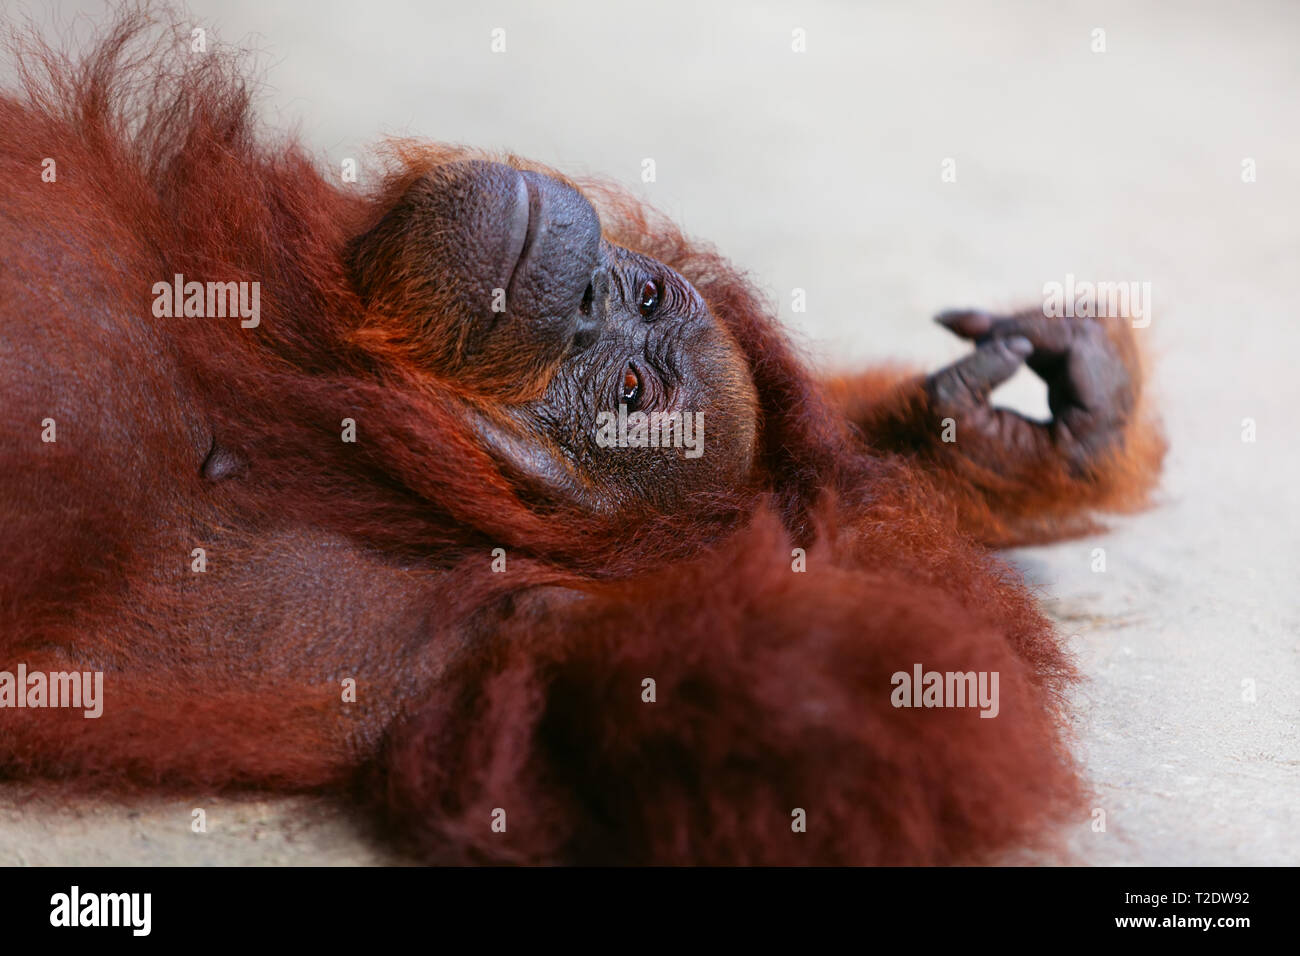 Wild Bornean orangutan at Semenggoh Nature Reserve, Wildlife Rehabilitation Centre in Kuching. Orangutans are endangered apes inhabiting rainforests o Stock Photo